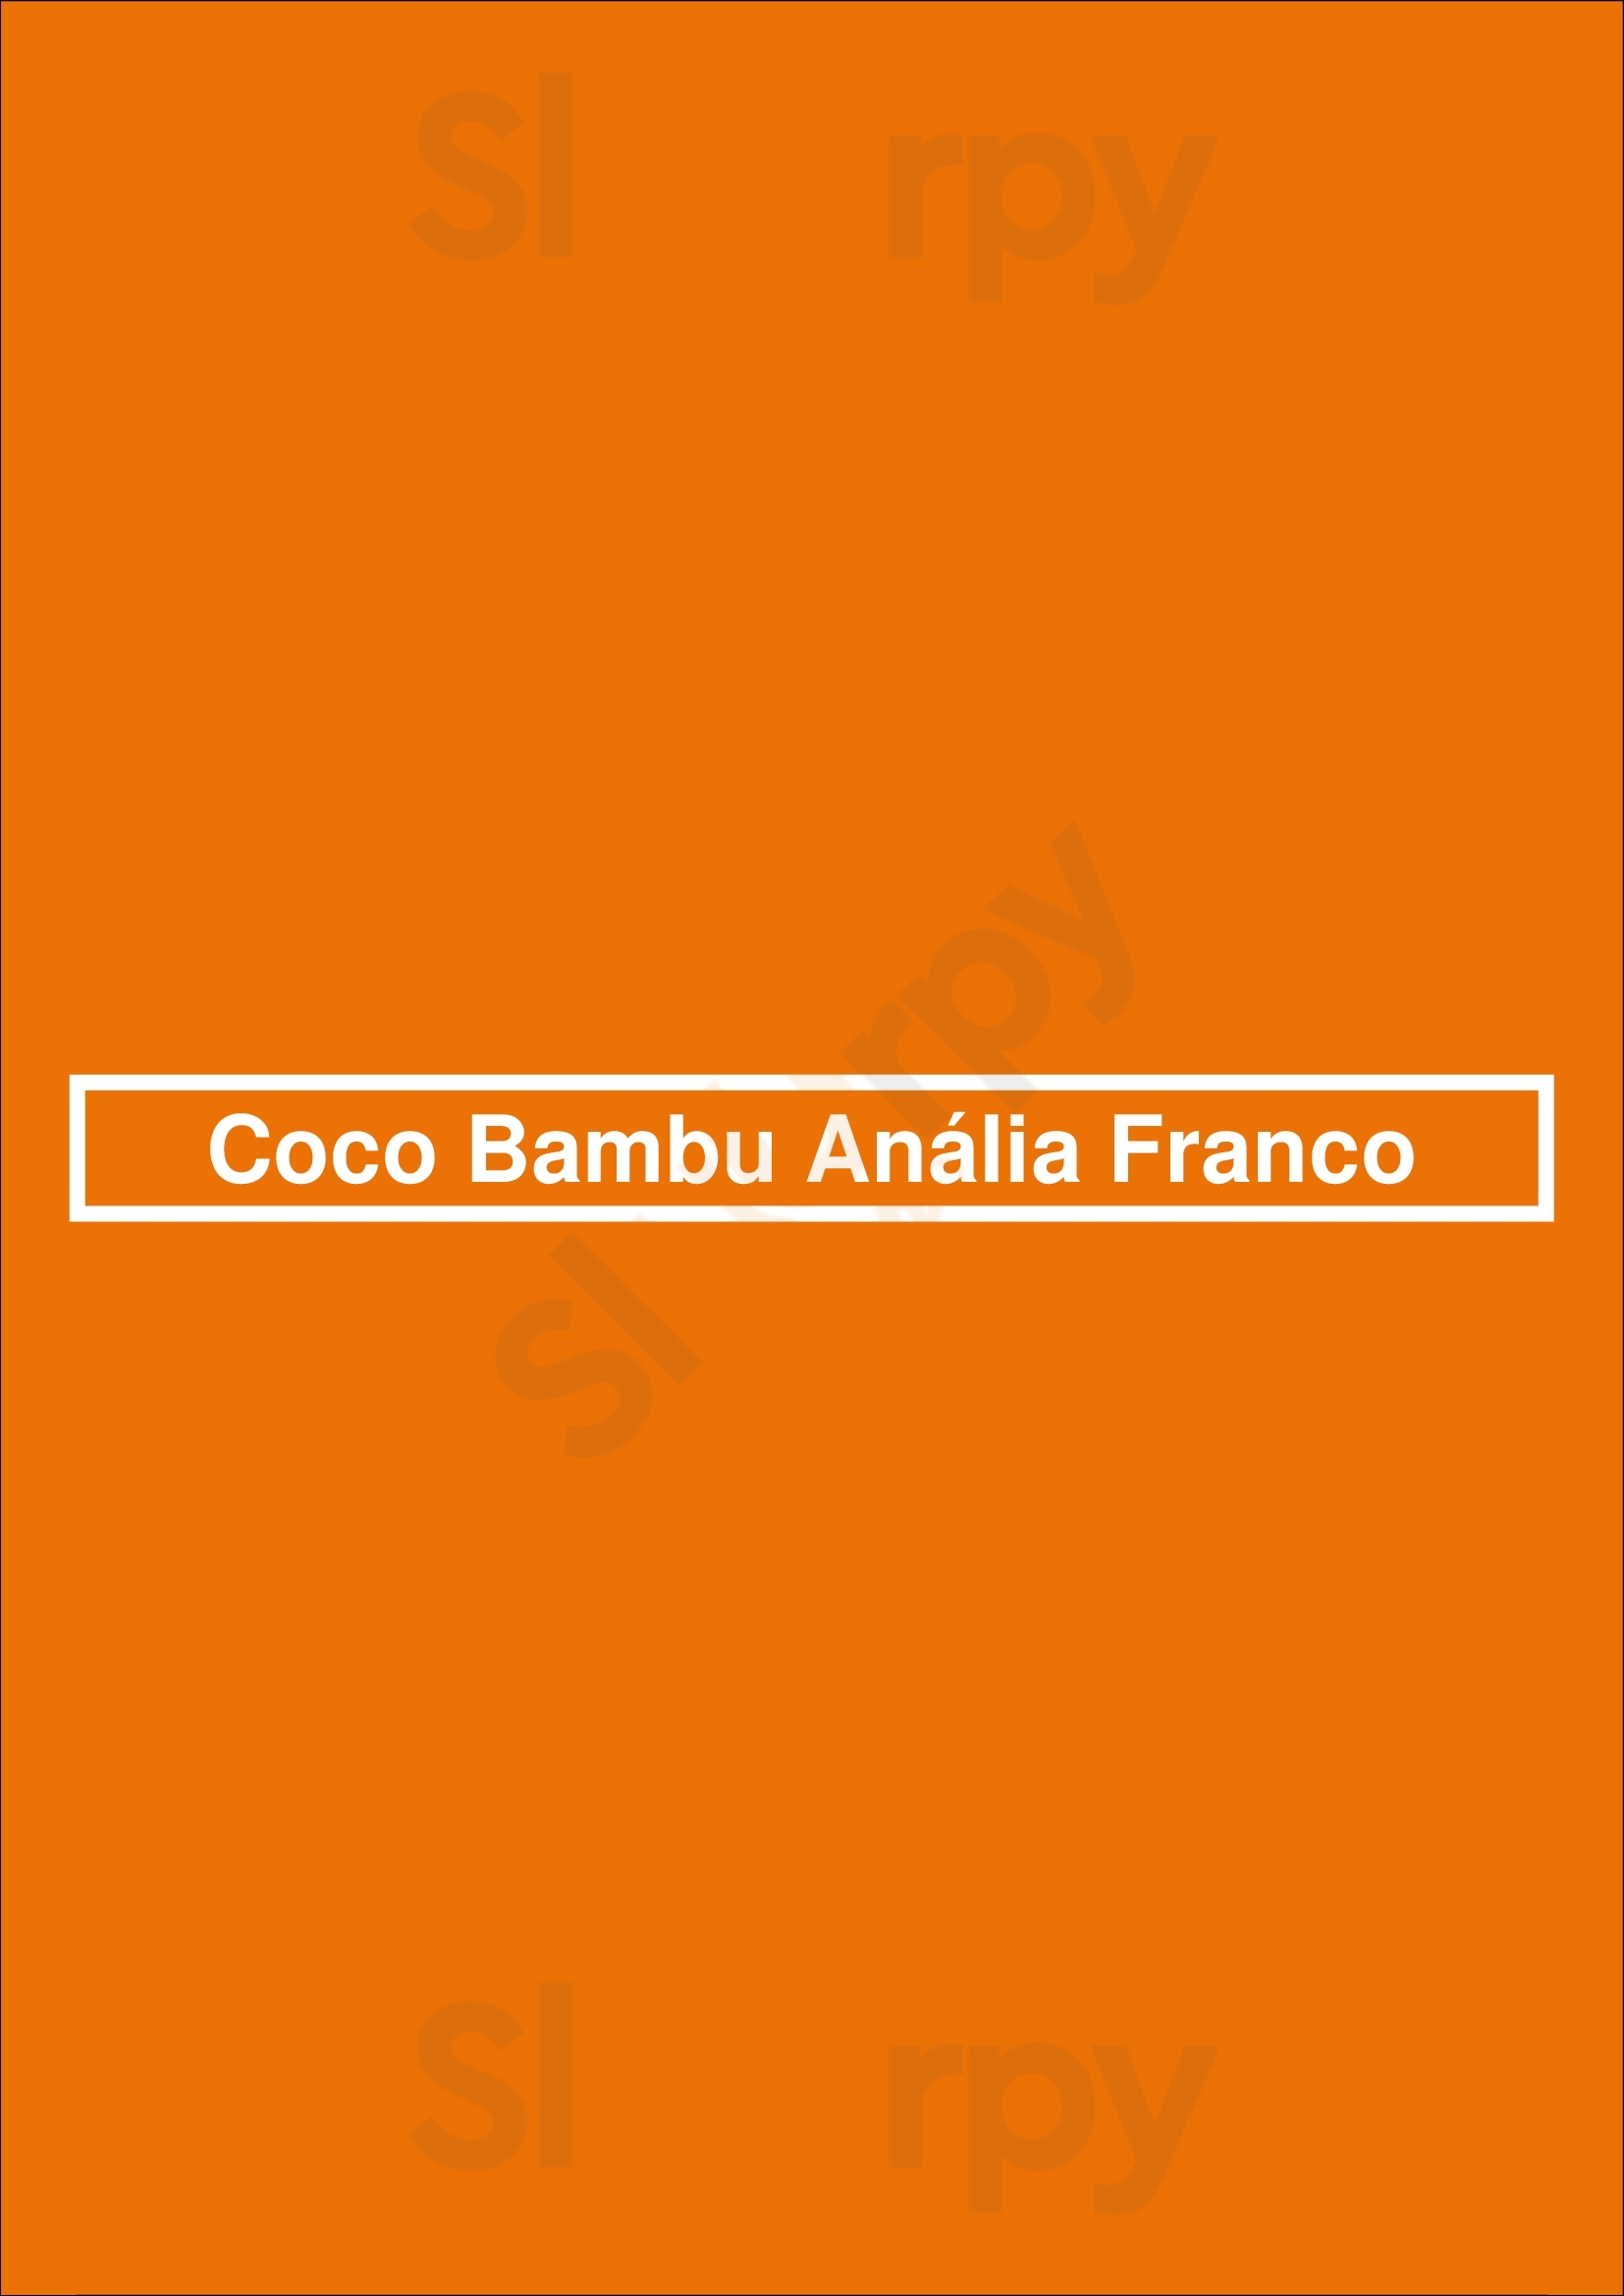 Coco Bambu Anália Franco São Paulo Menu - 1